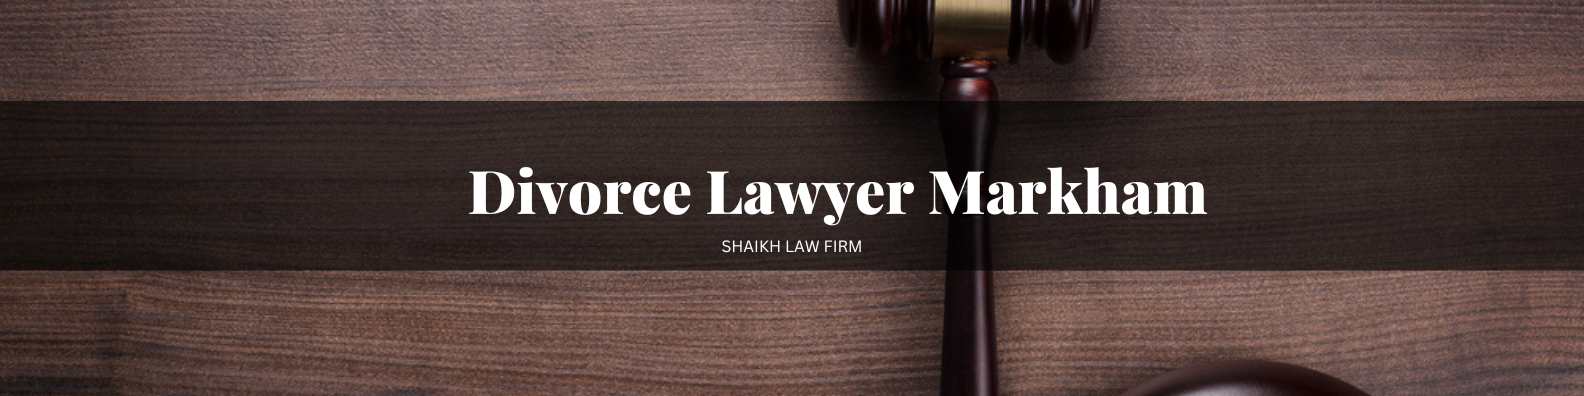 Divorce Lawyer Markham